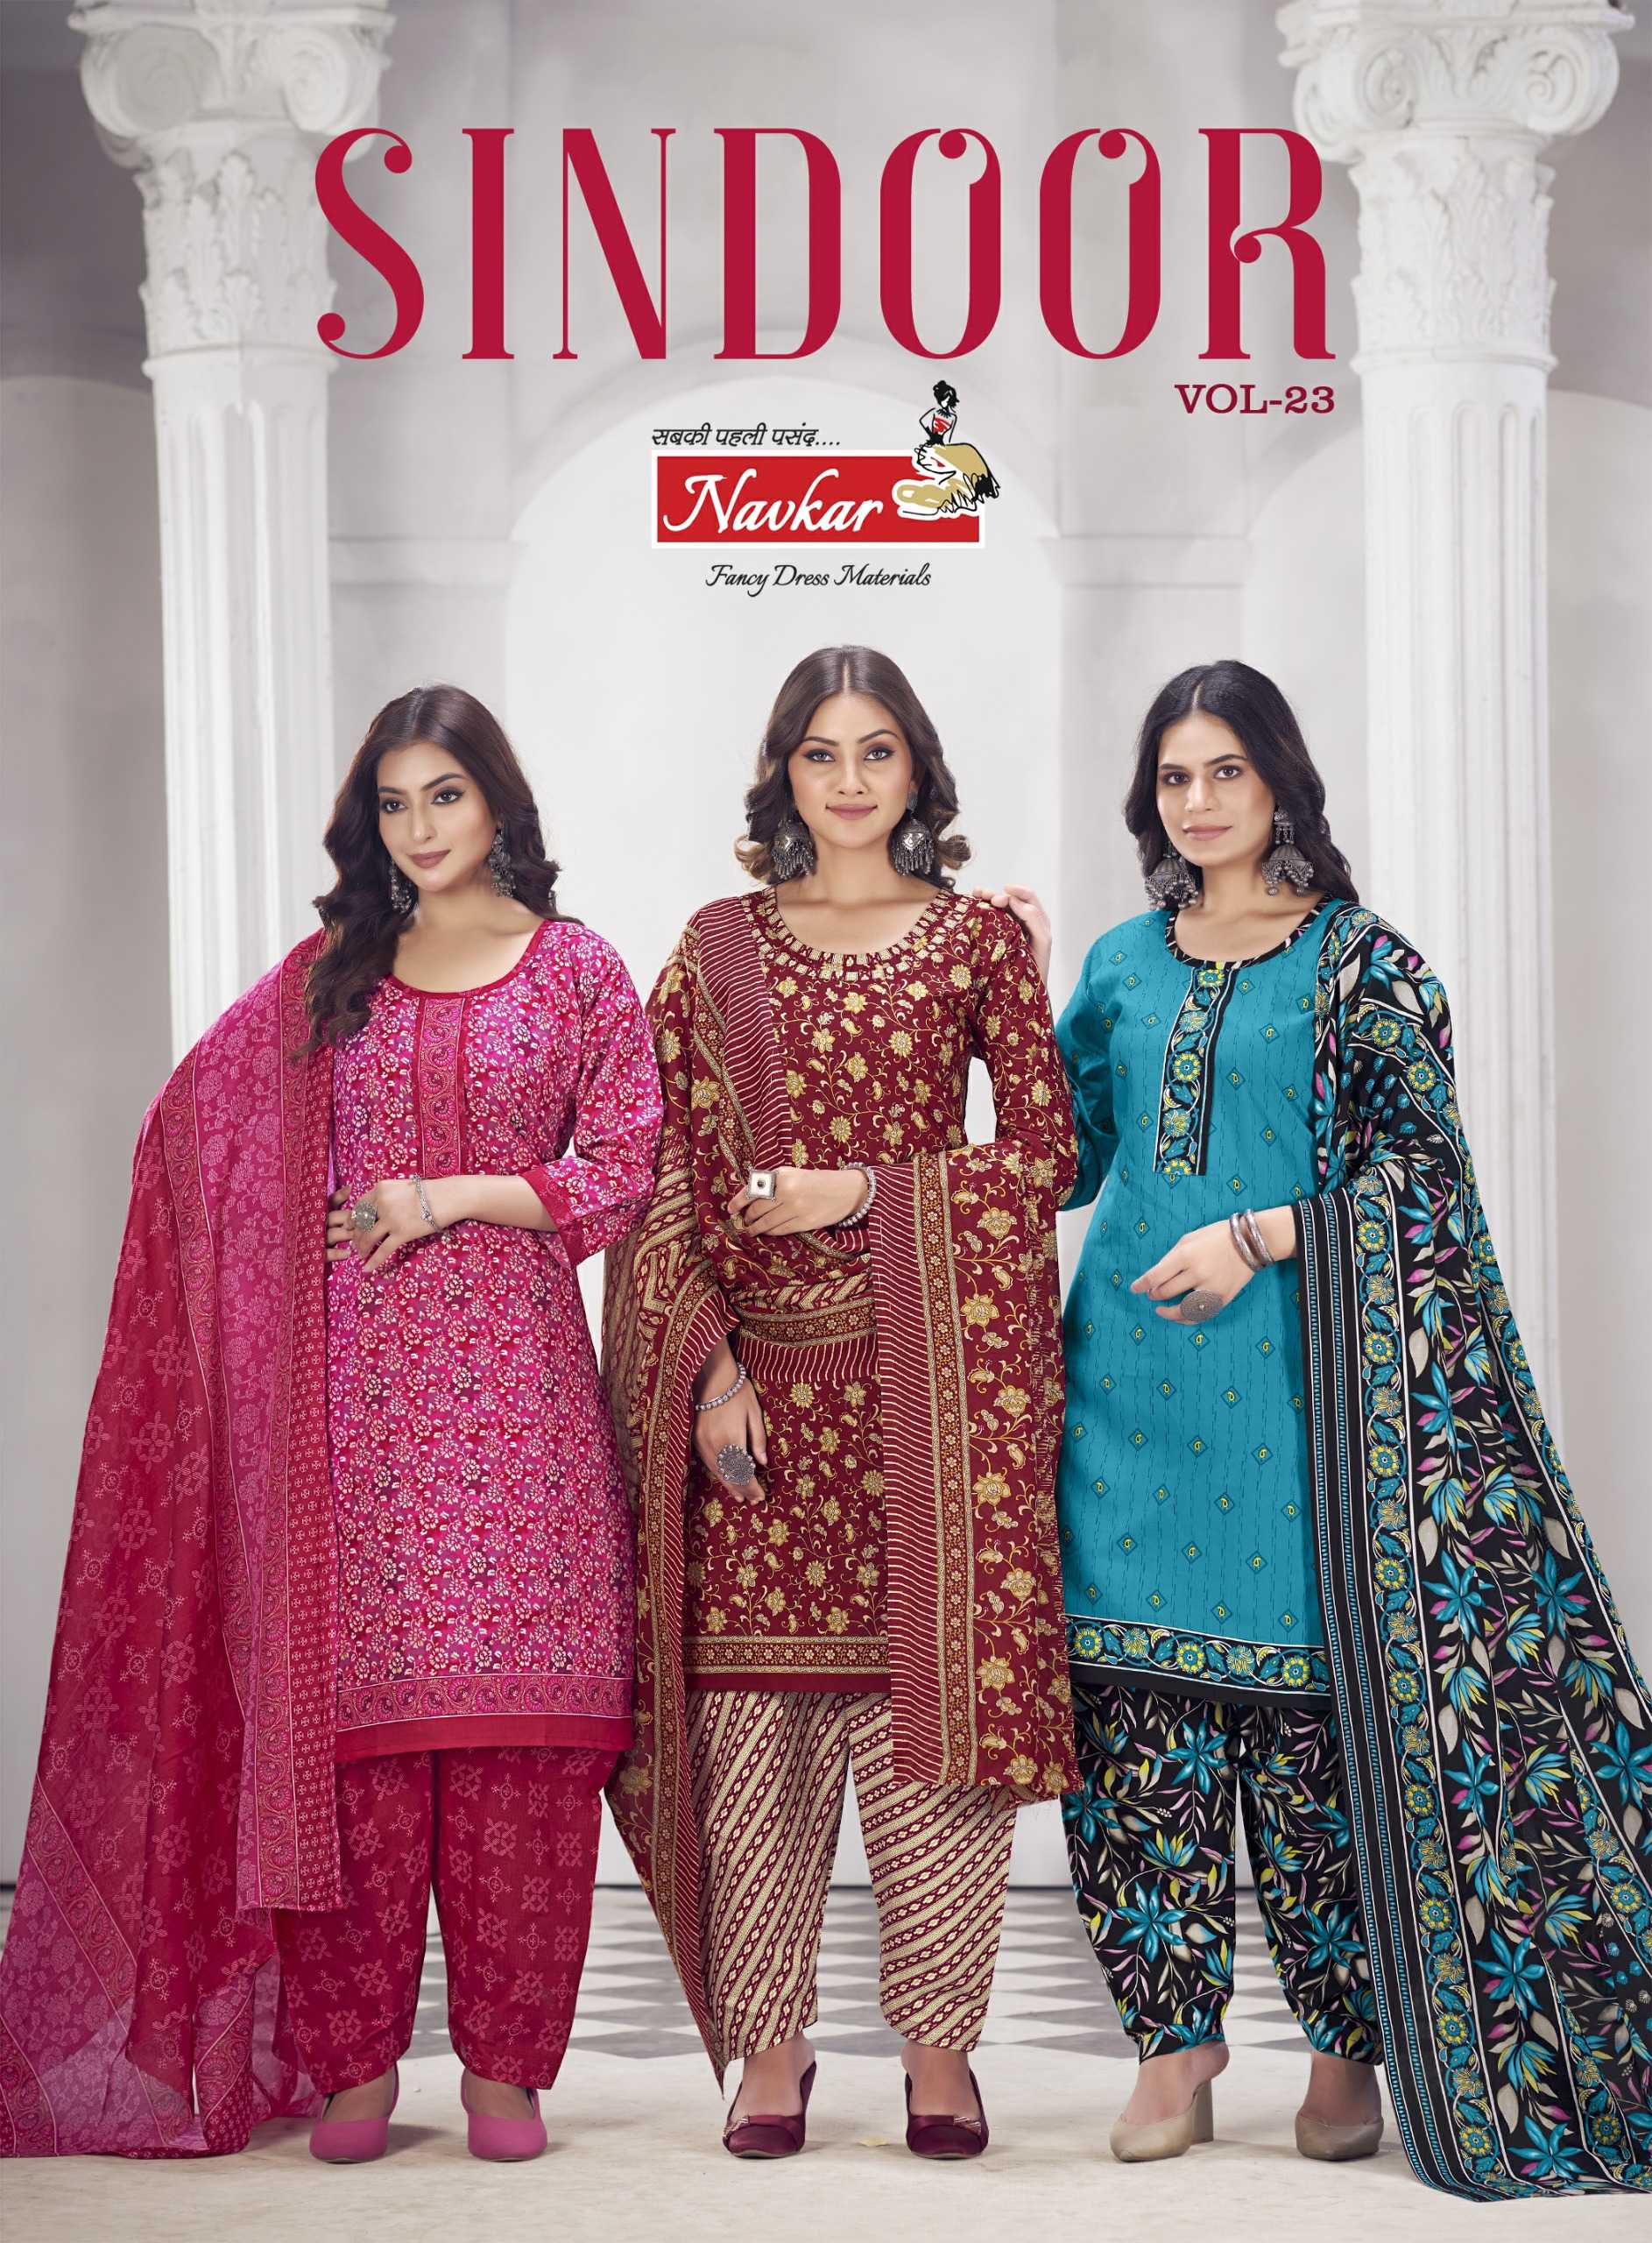 sindoor vol 23 by navkar new launching cotton print readymade full stitch salwar suit